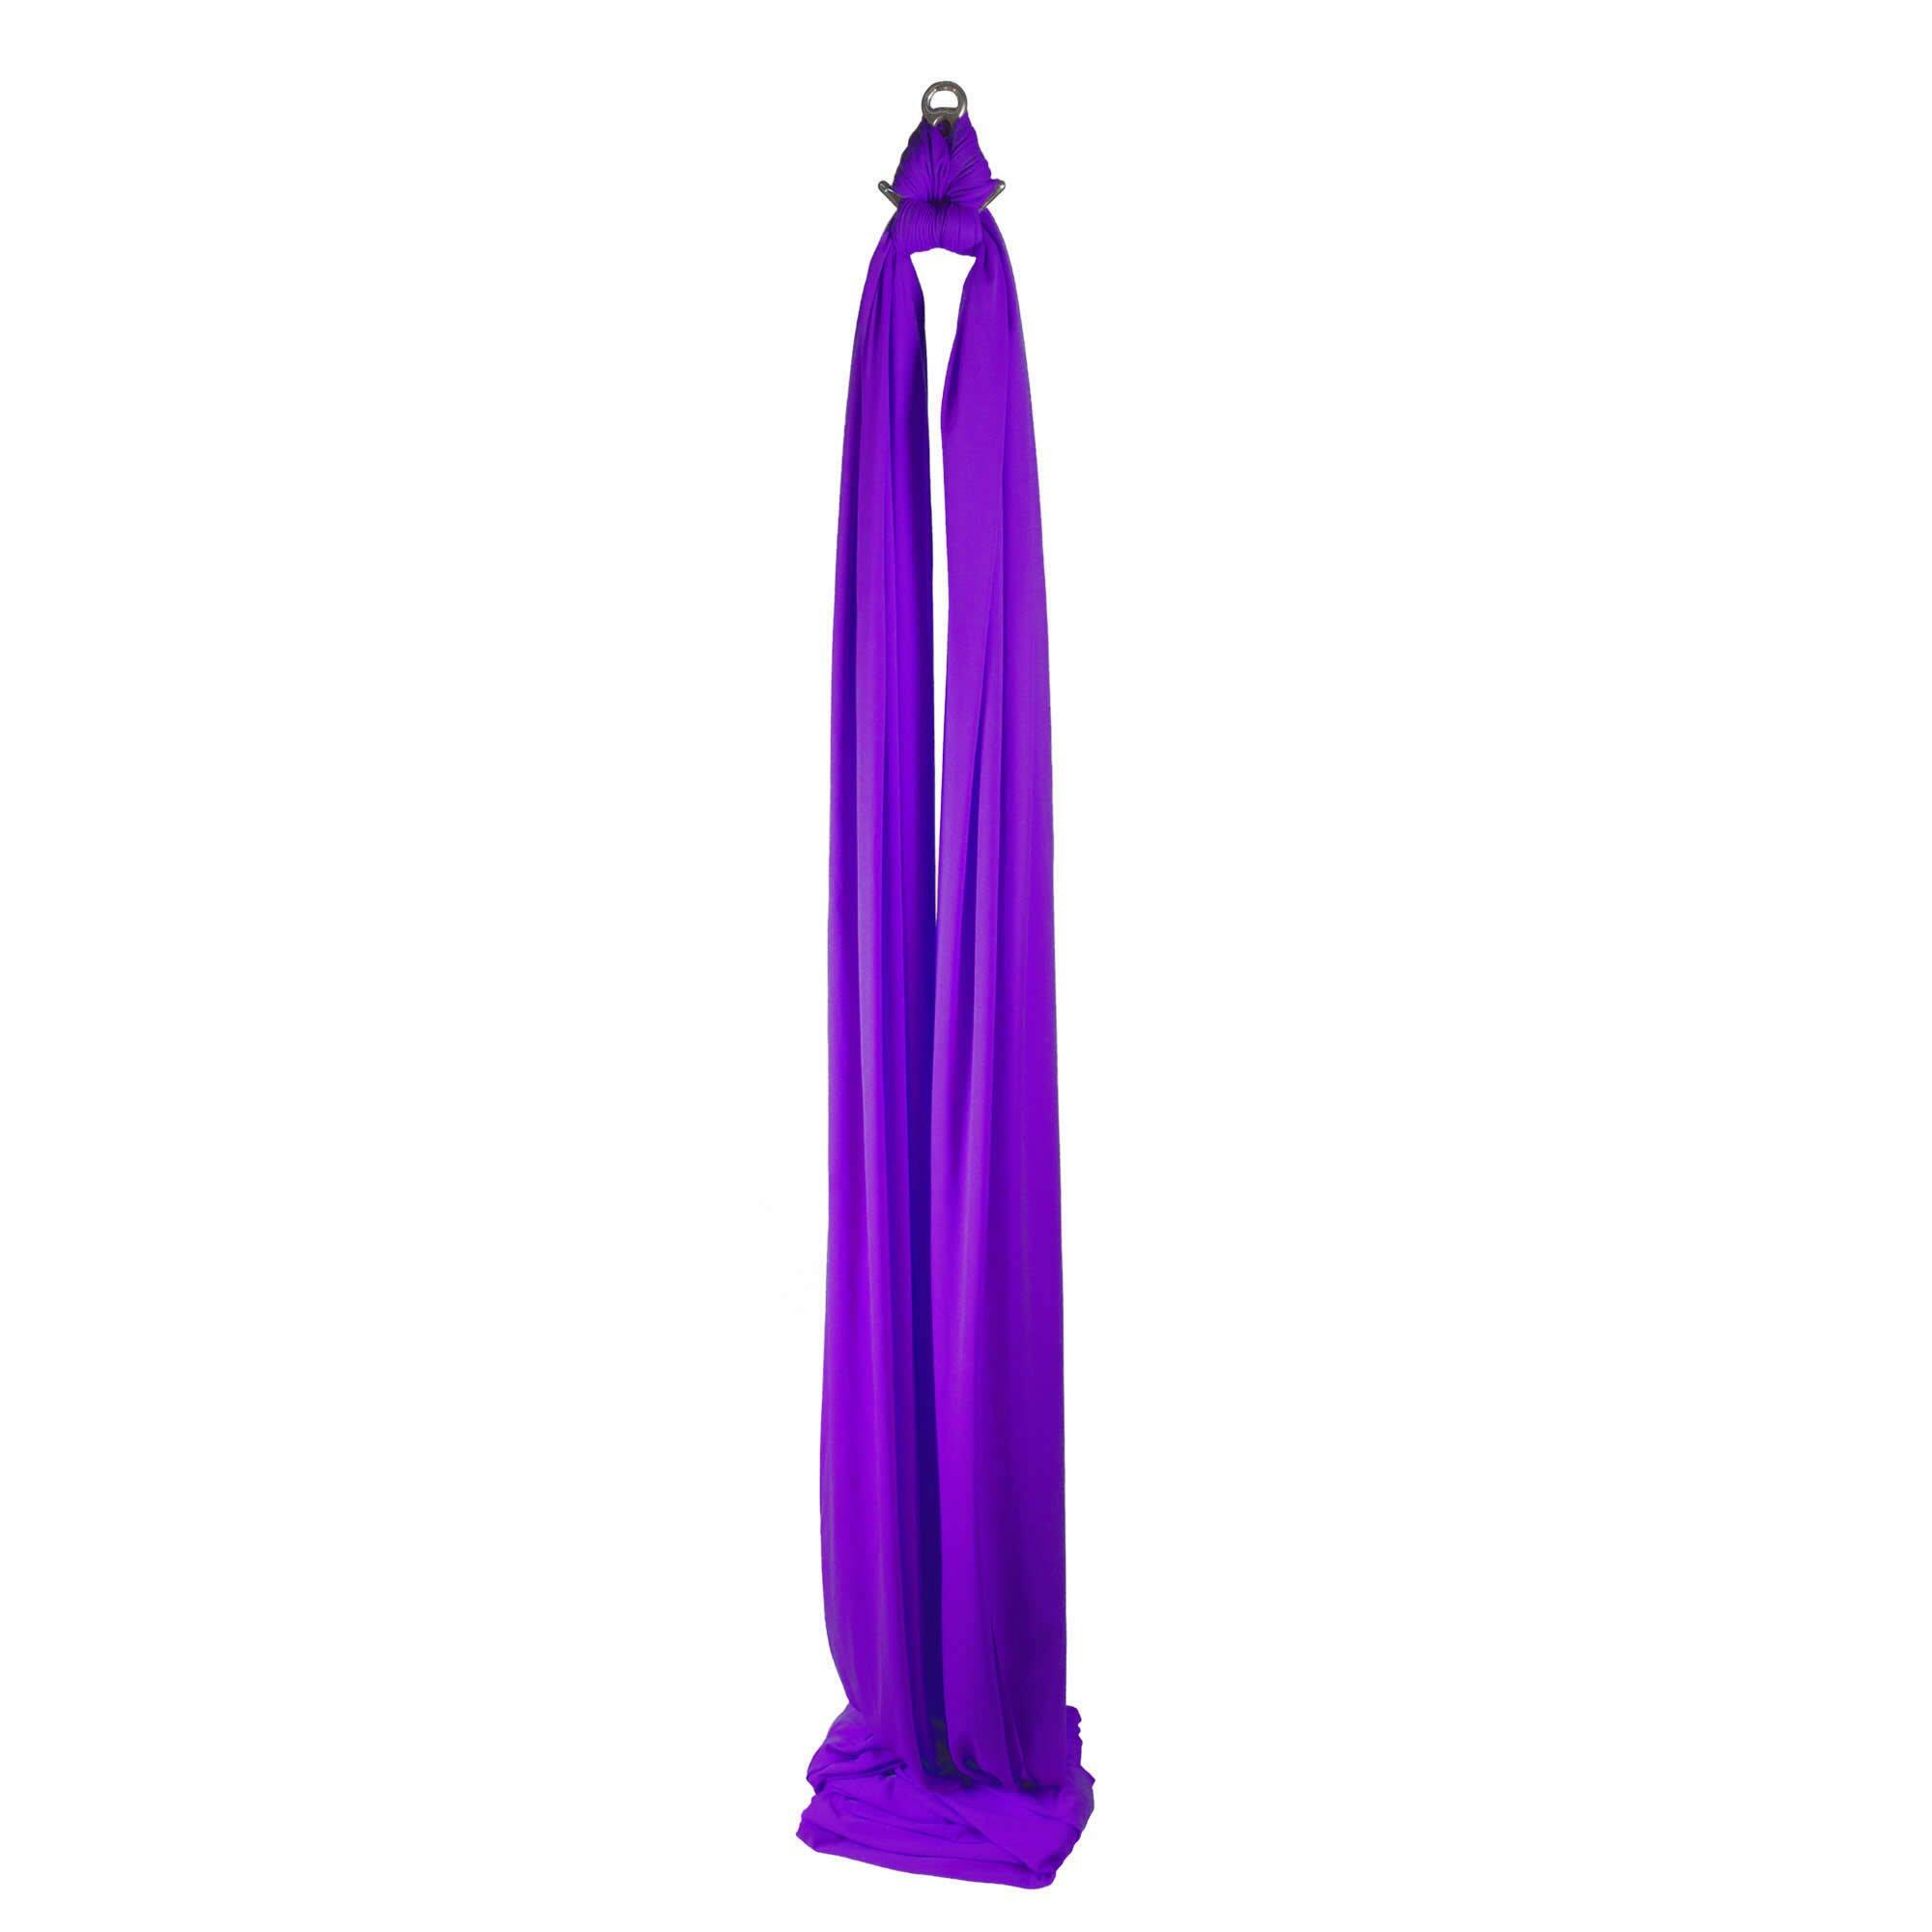 FIRETOYS Firetoys Aerial Silk (Aerial Fabric / Tissus) - Purple